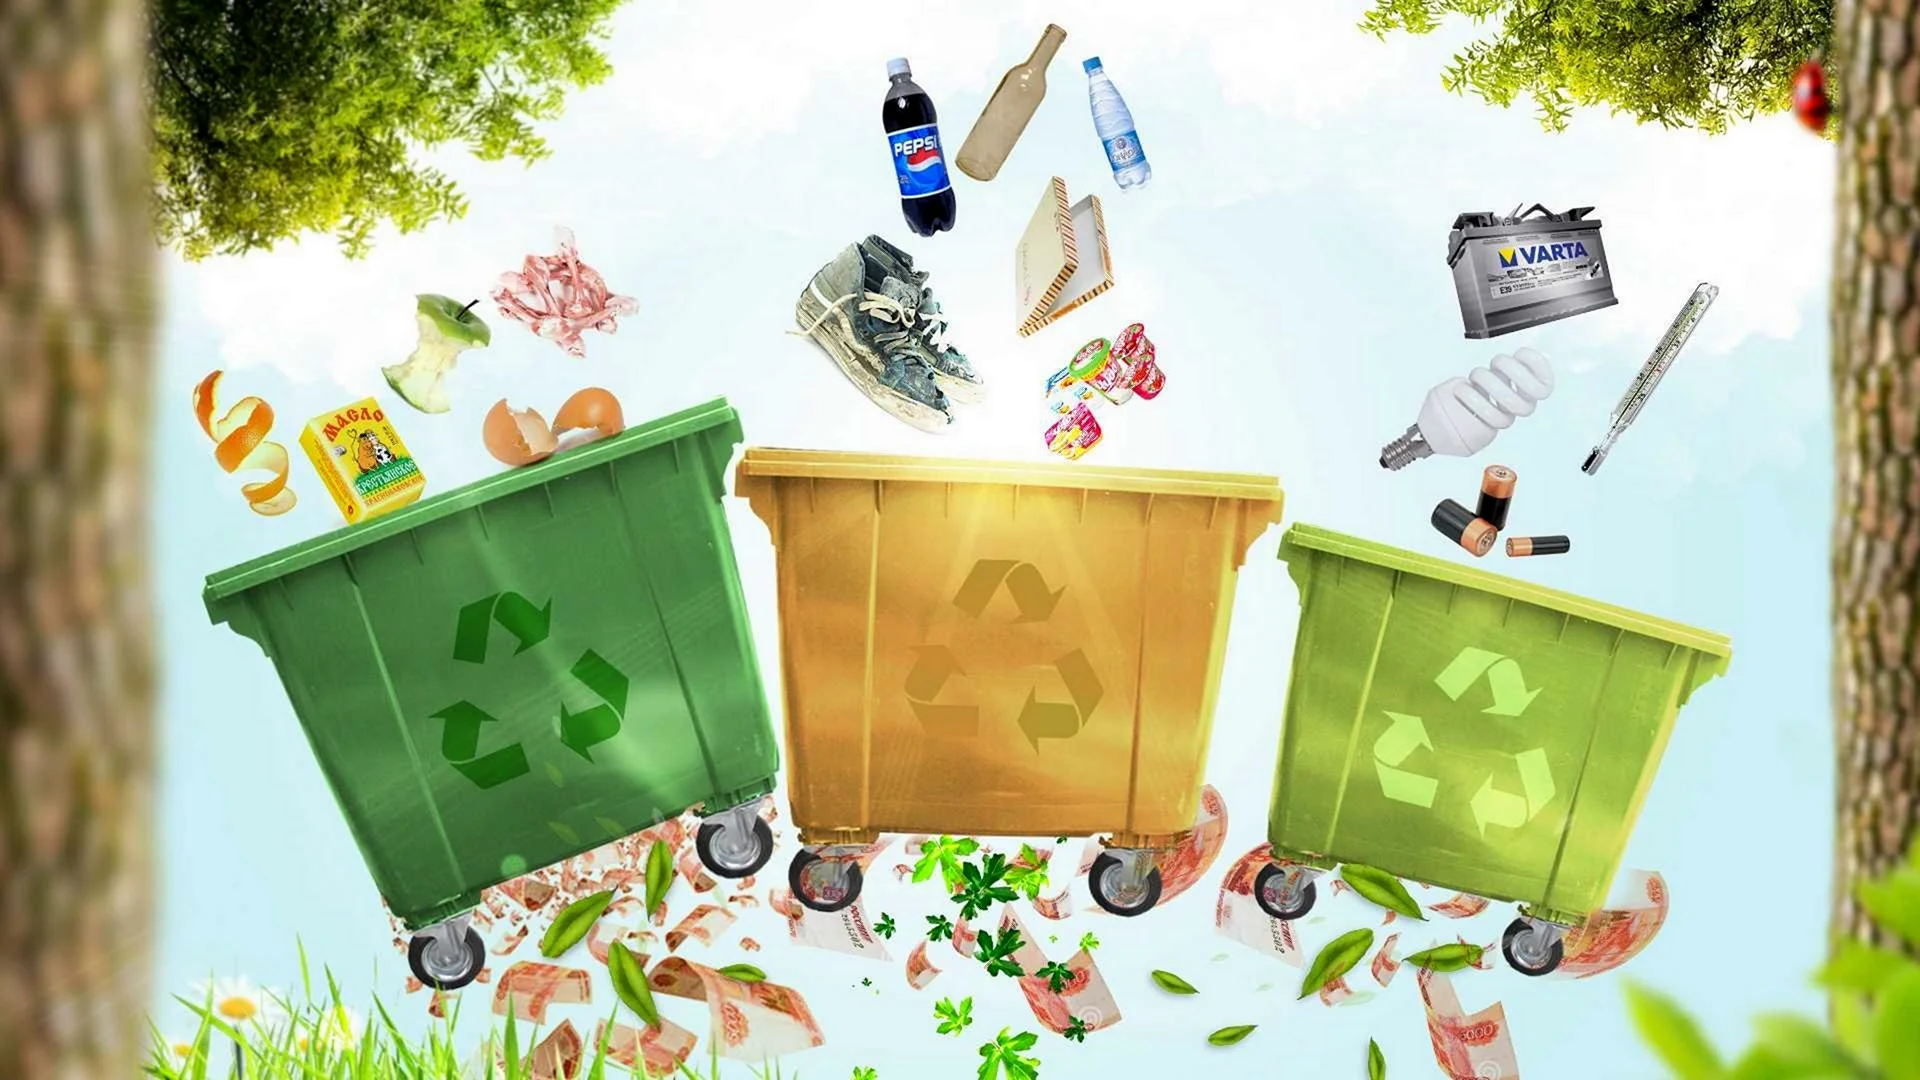 Сбор и утилизация мусора